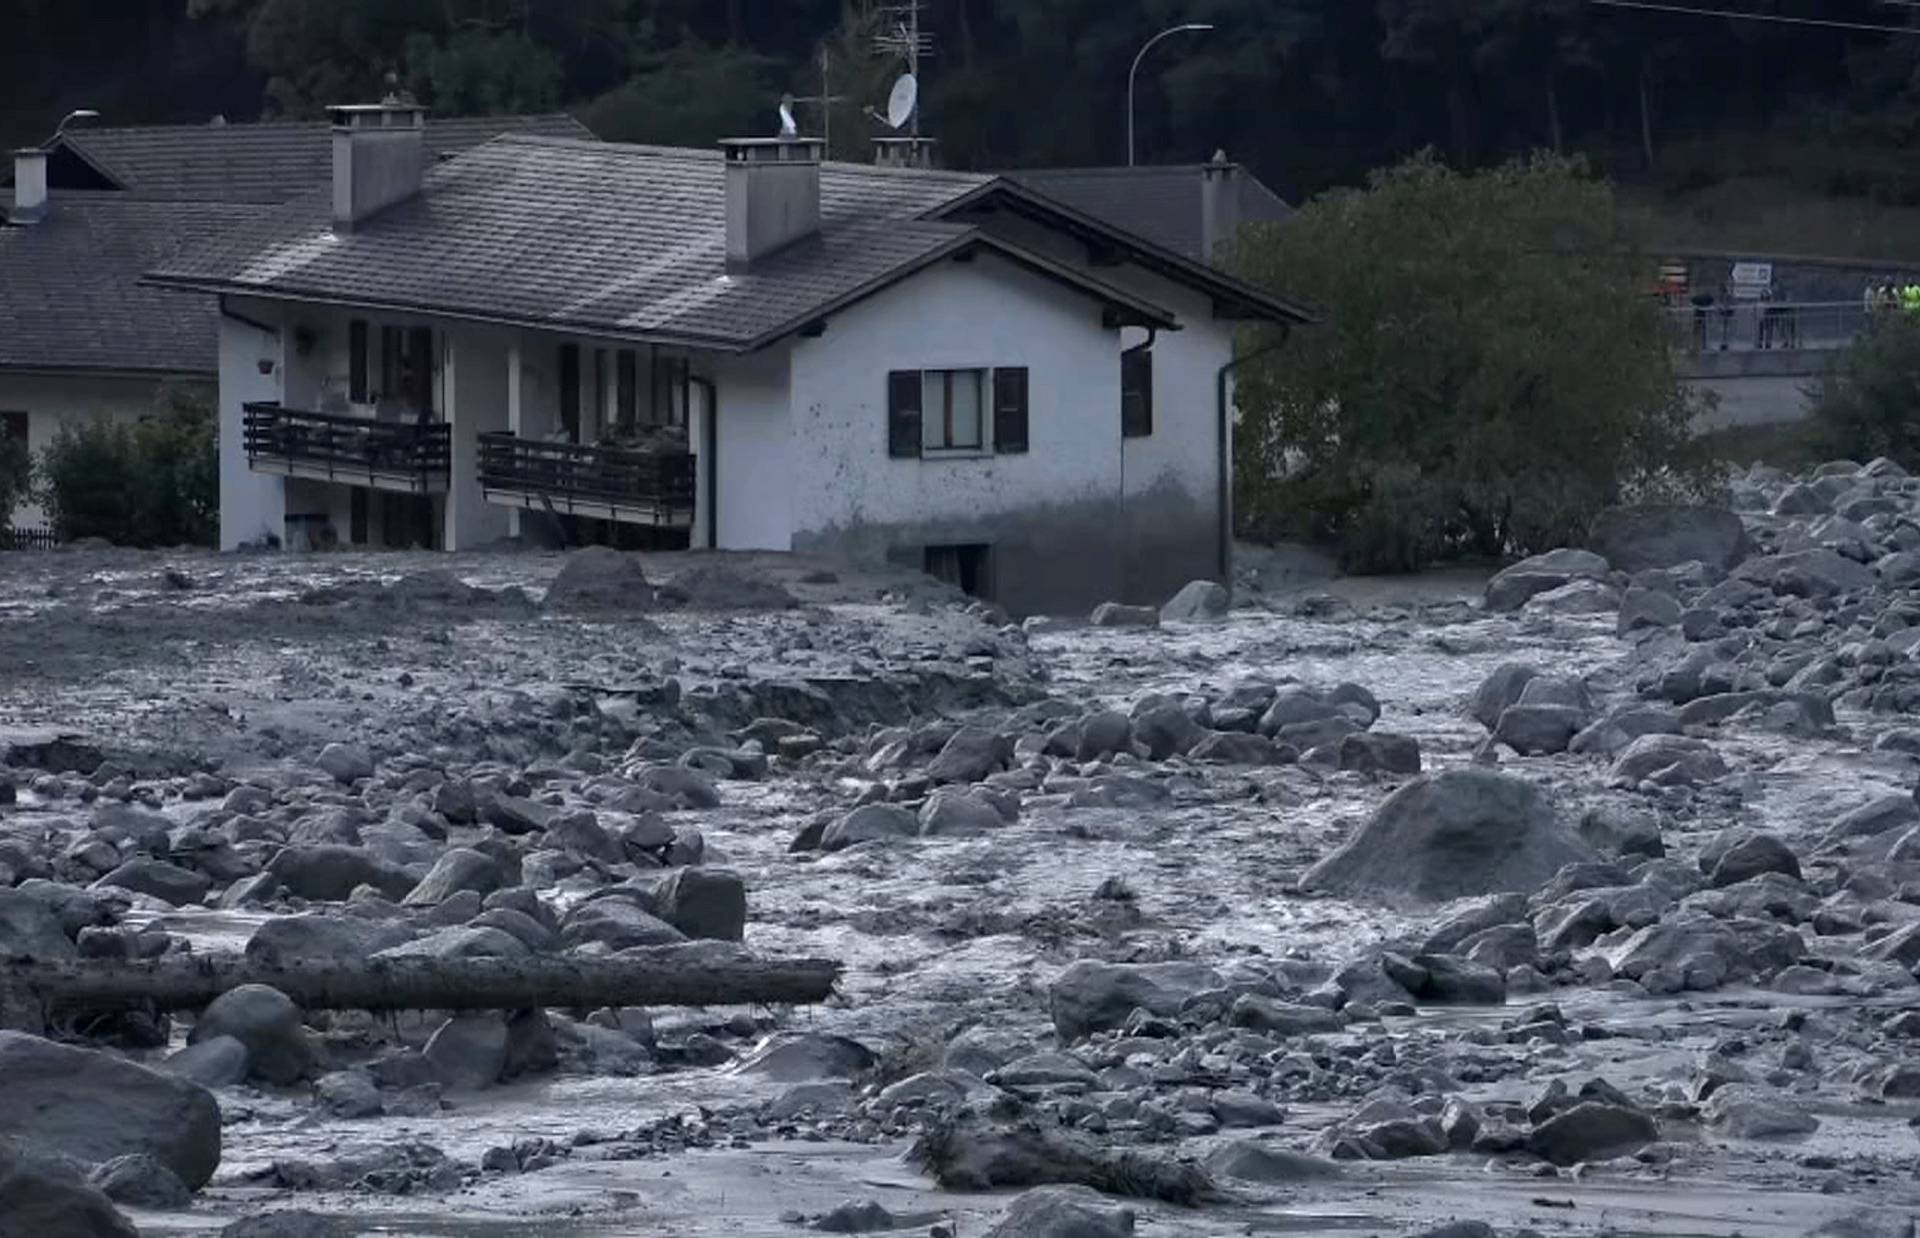 Still image taken from video shows the remote village of Bondo in Switzerland after a landslide struck it